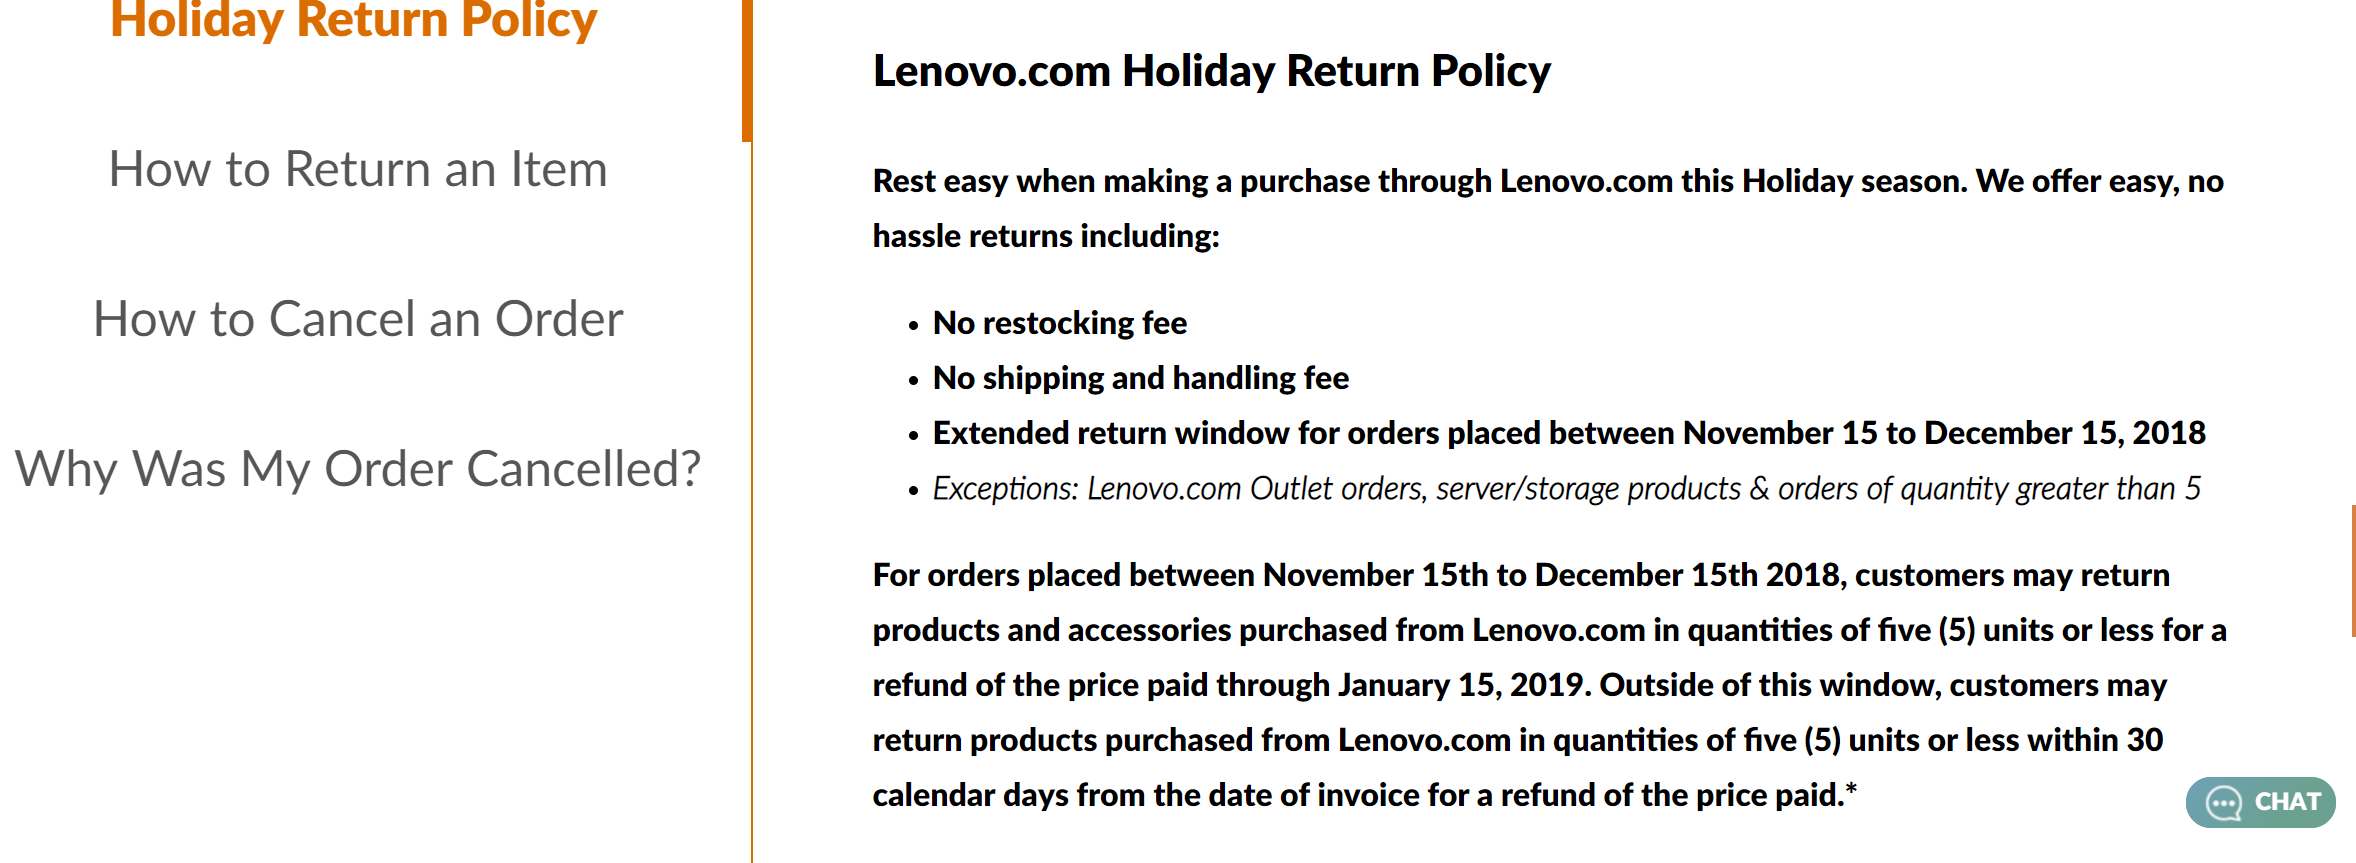 Descubrir 77+ imagen lenovo holiday return policy